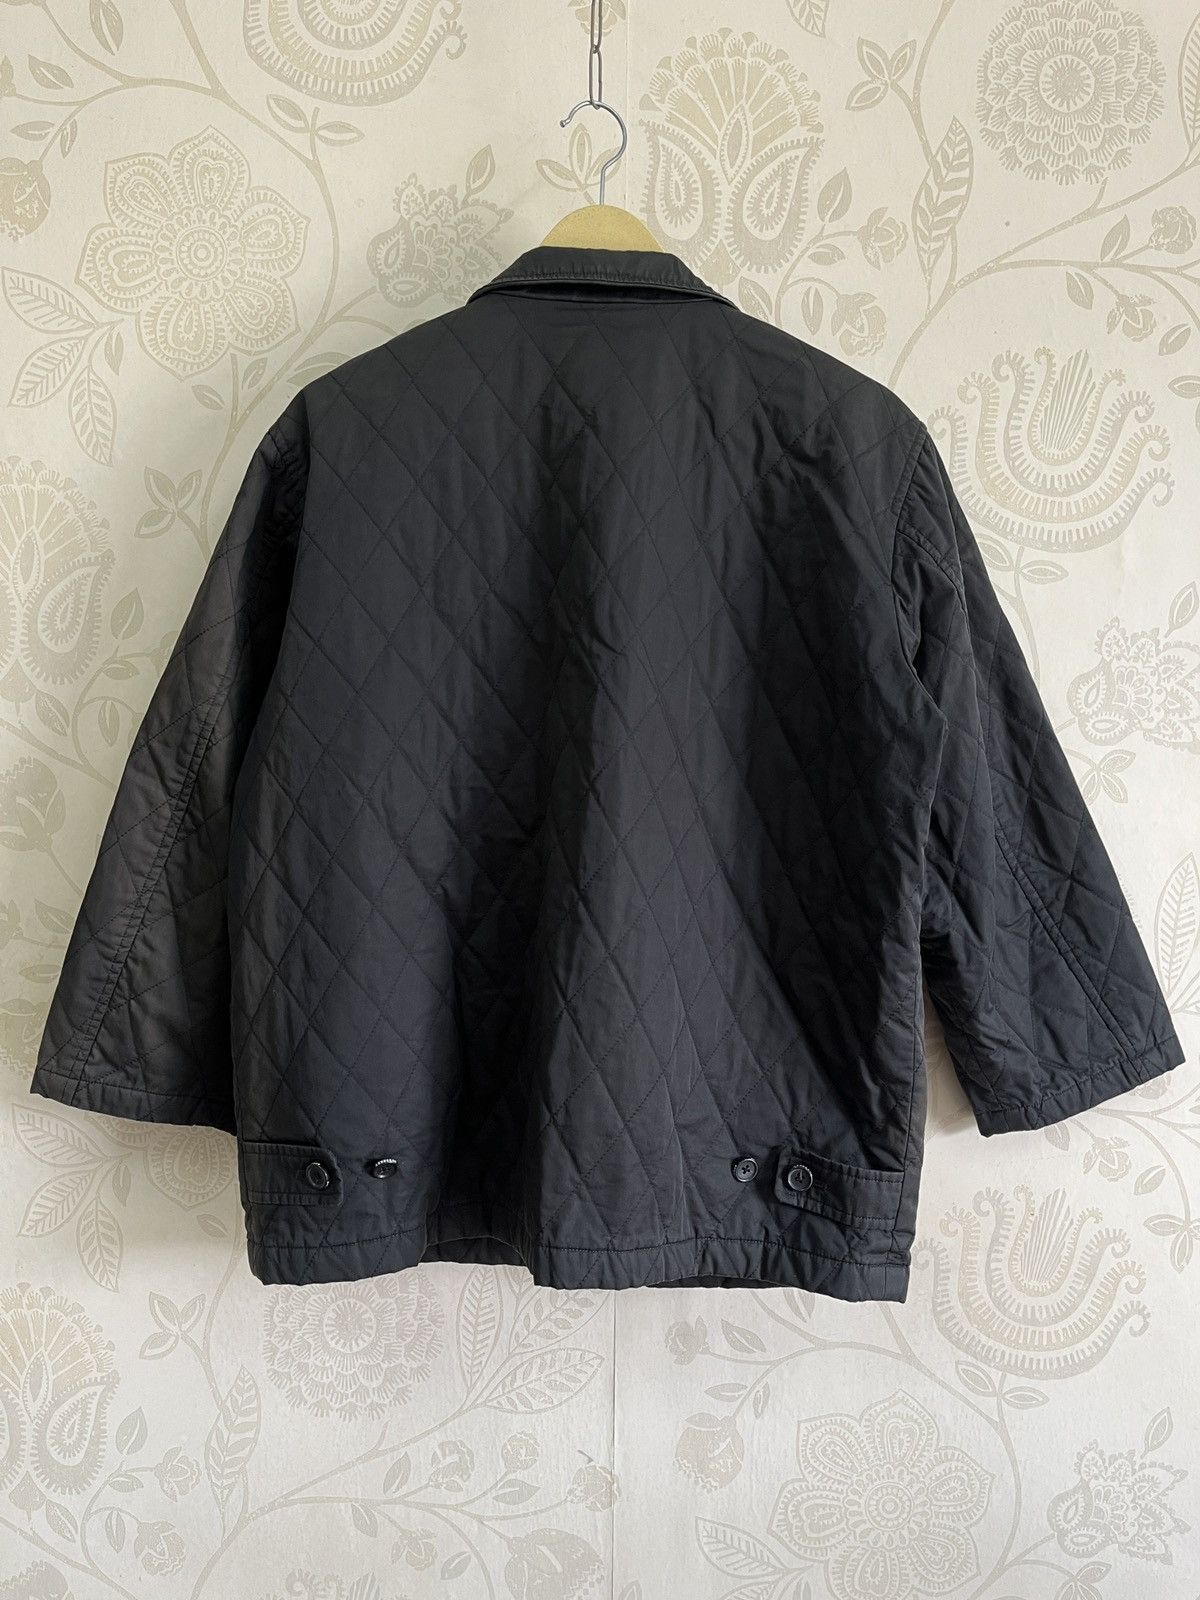 Vintage Burberry London Quilt Jacket - 2